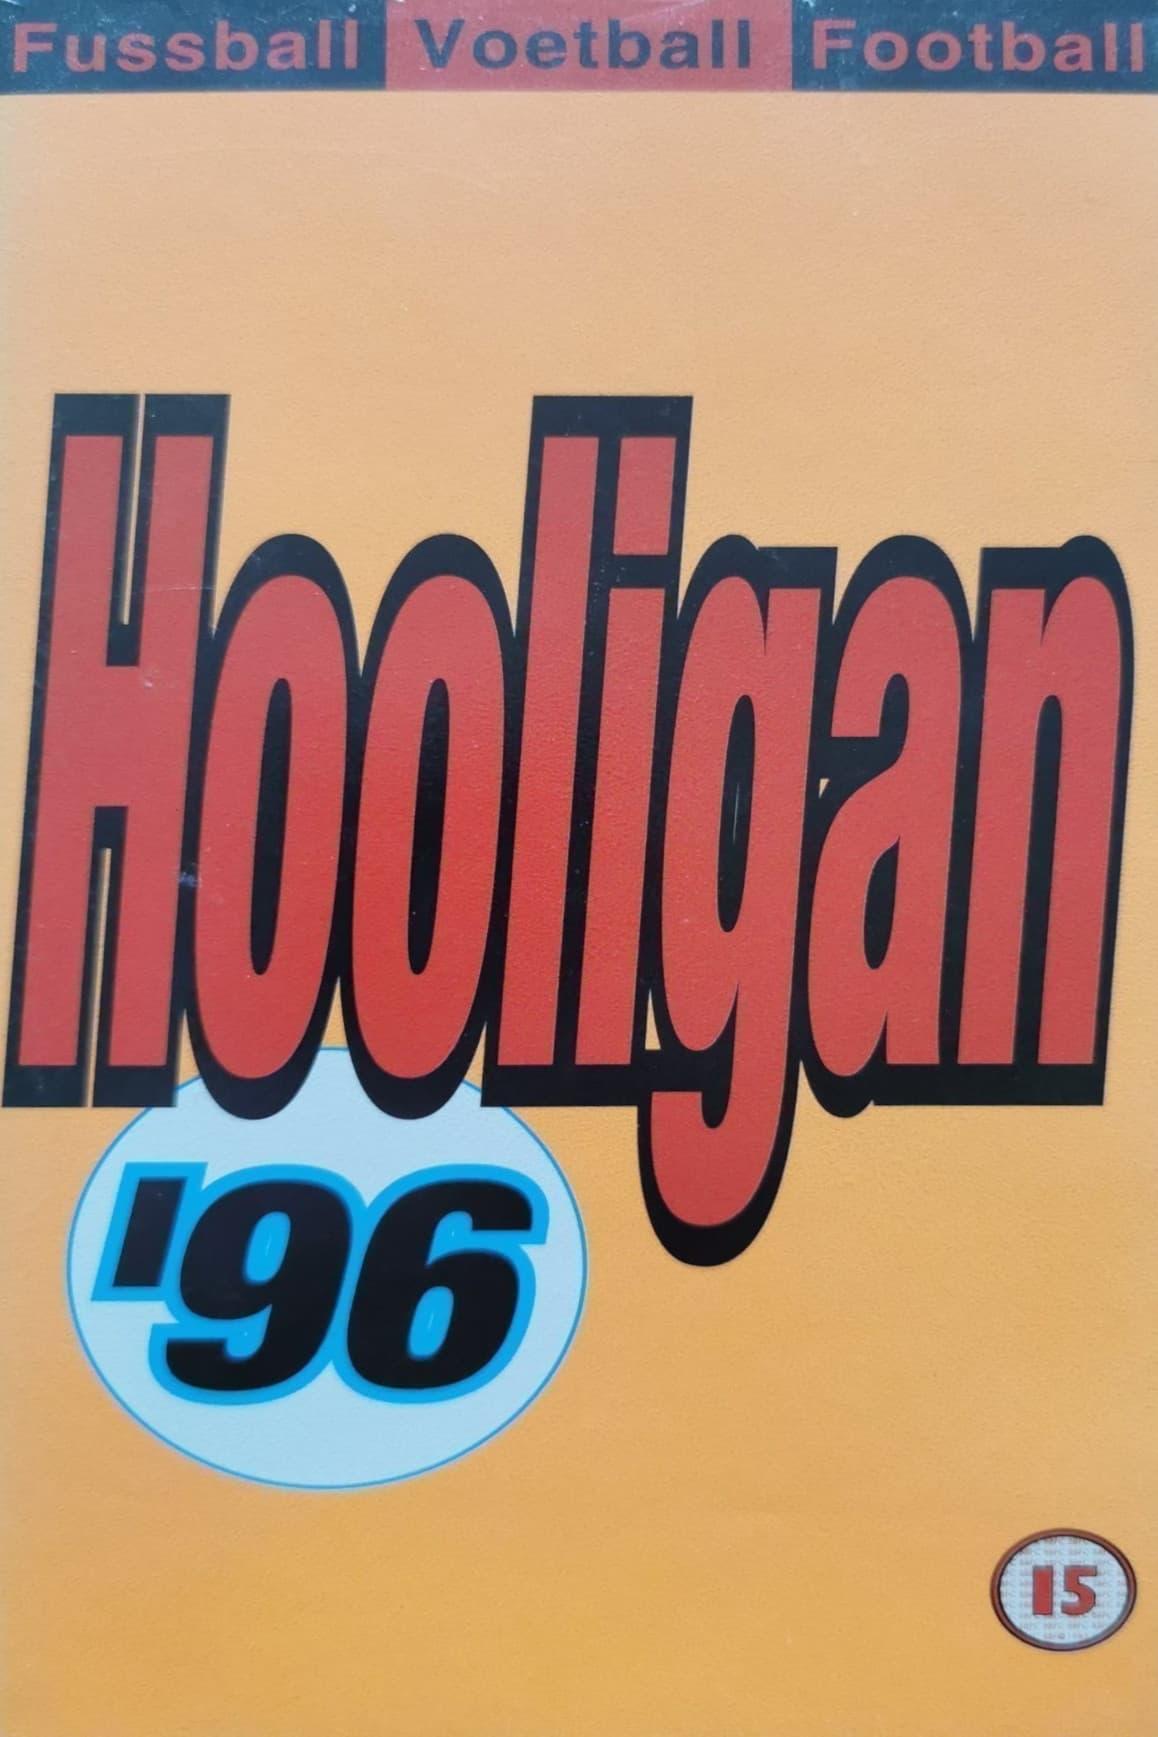 Hooligan '96 poster